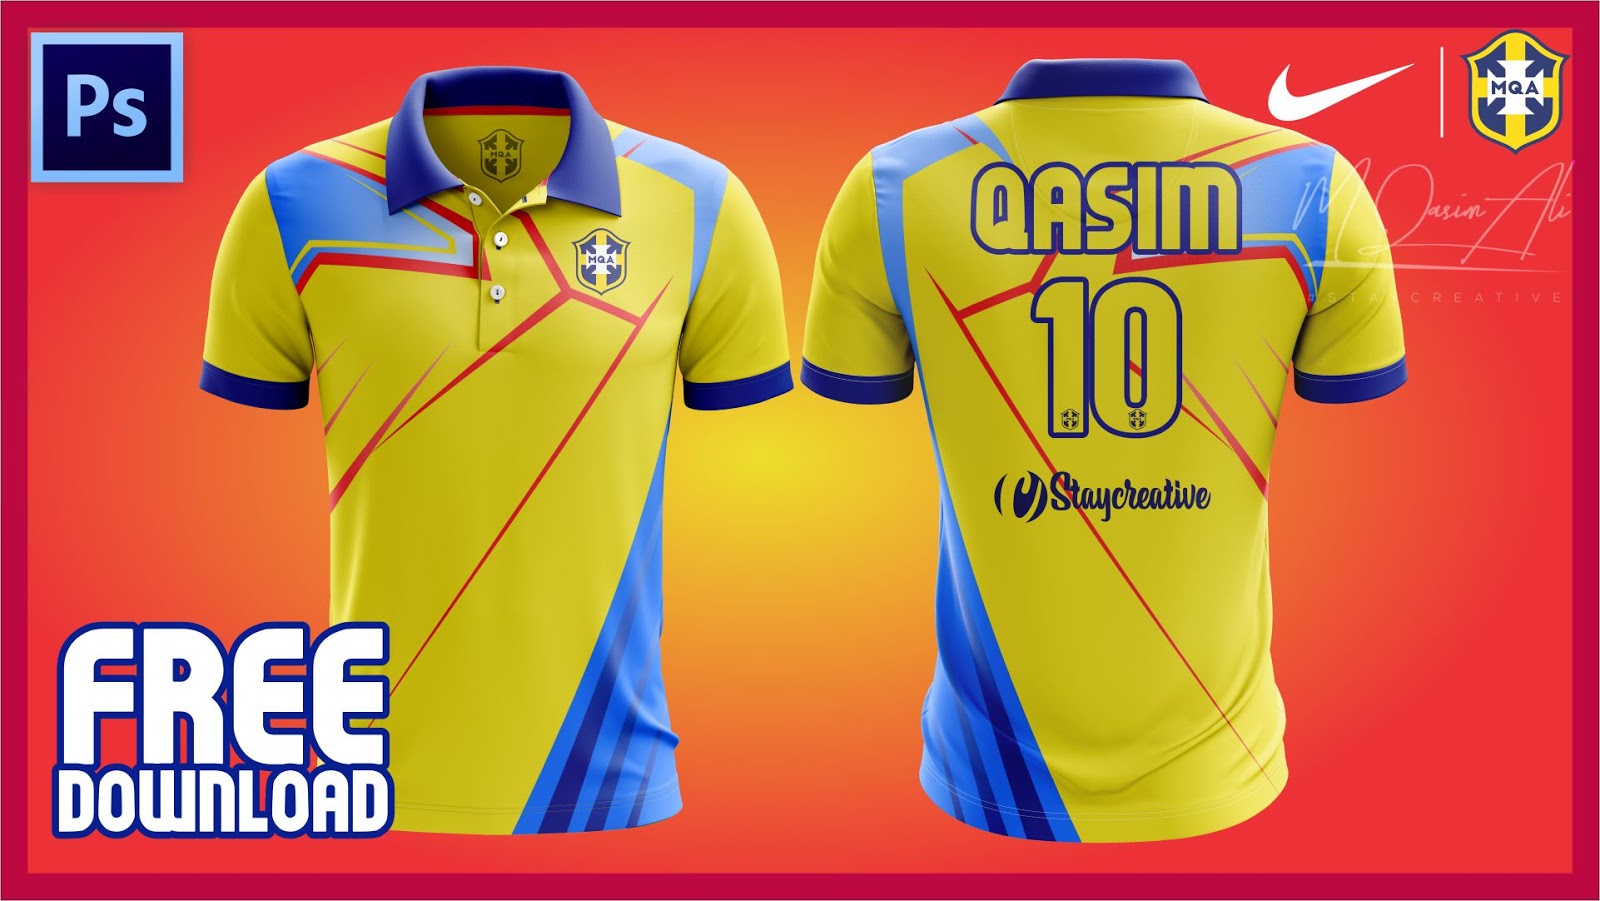 Download Epic Cricket Shirt Design Tutorial + Free Yellow image PSD Mockup Download By M Qasim Ali - M ...